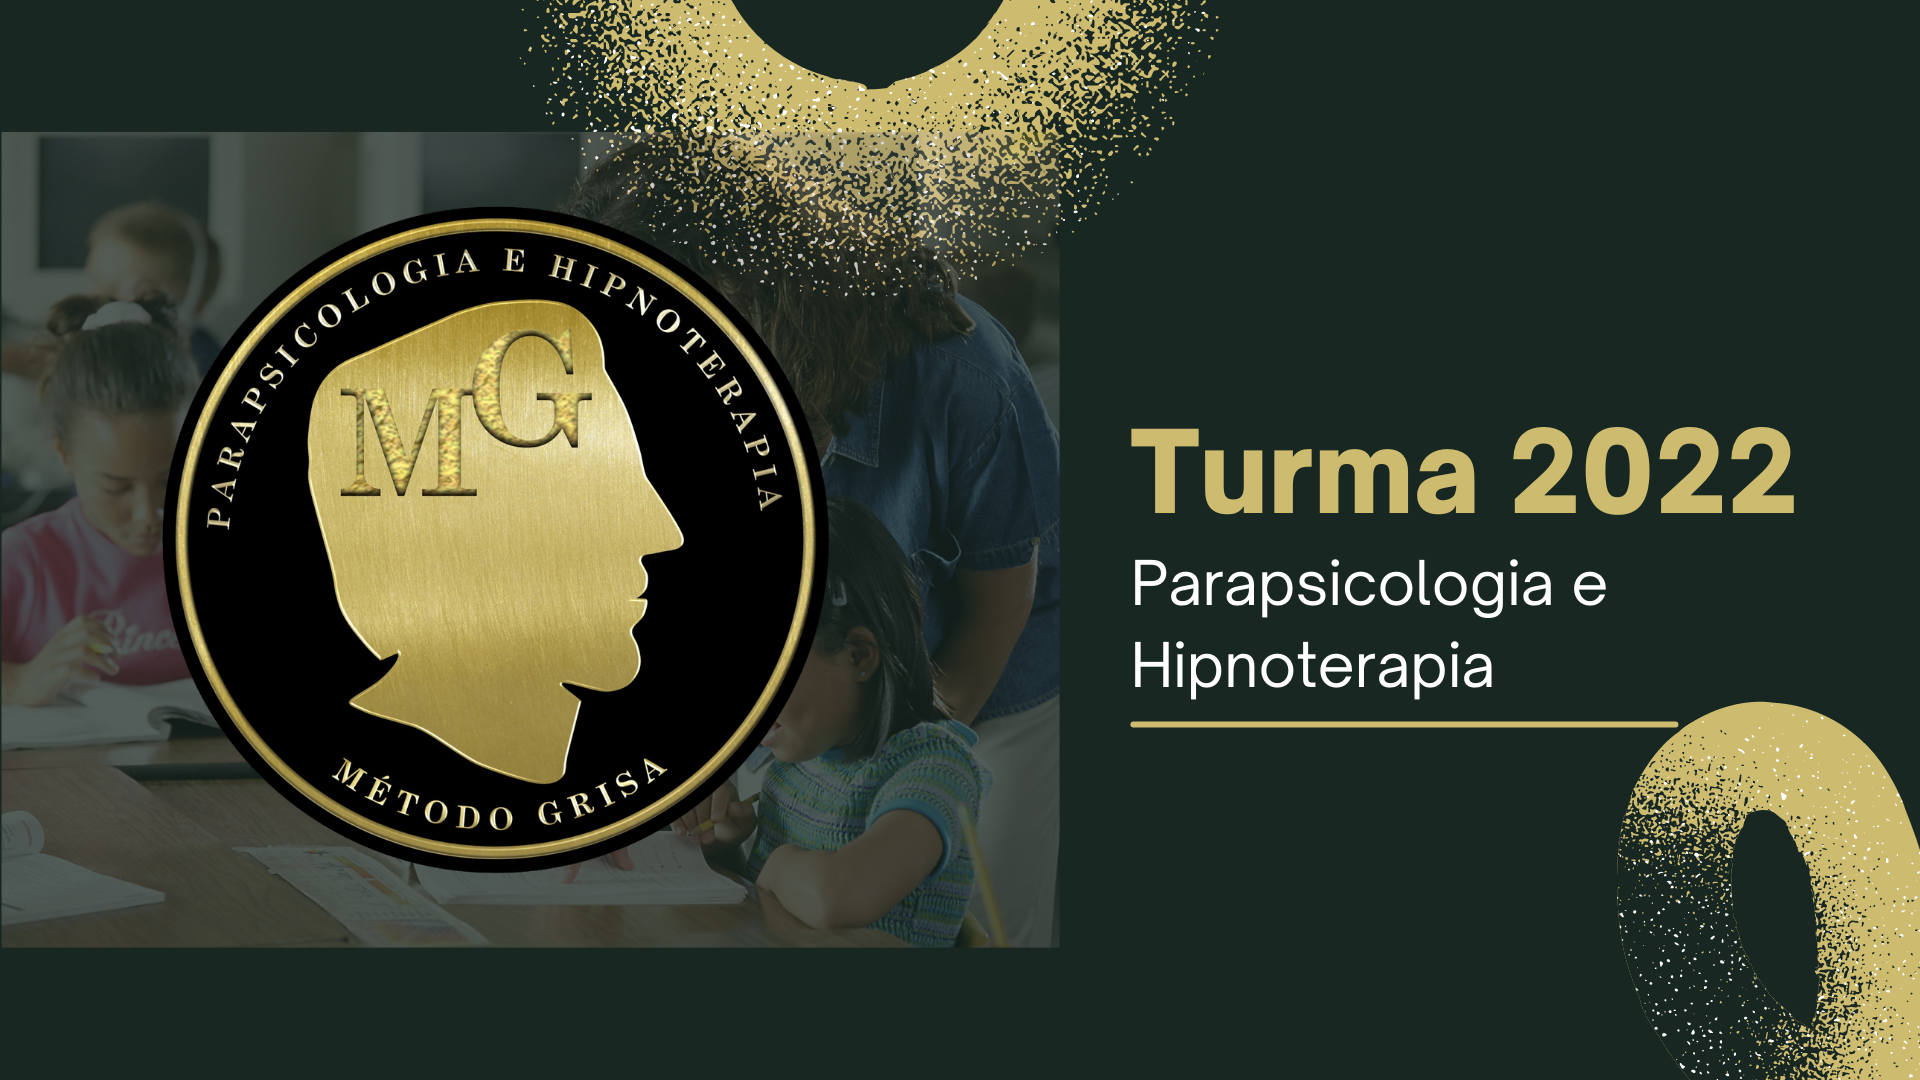 Parapsicologia e Hipnoterapia Turma 2022